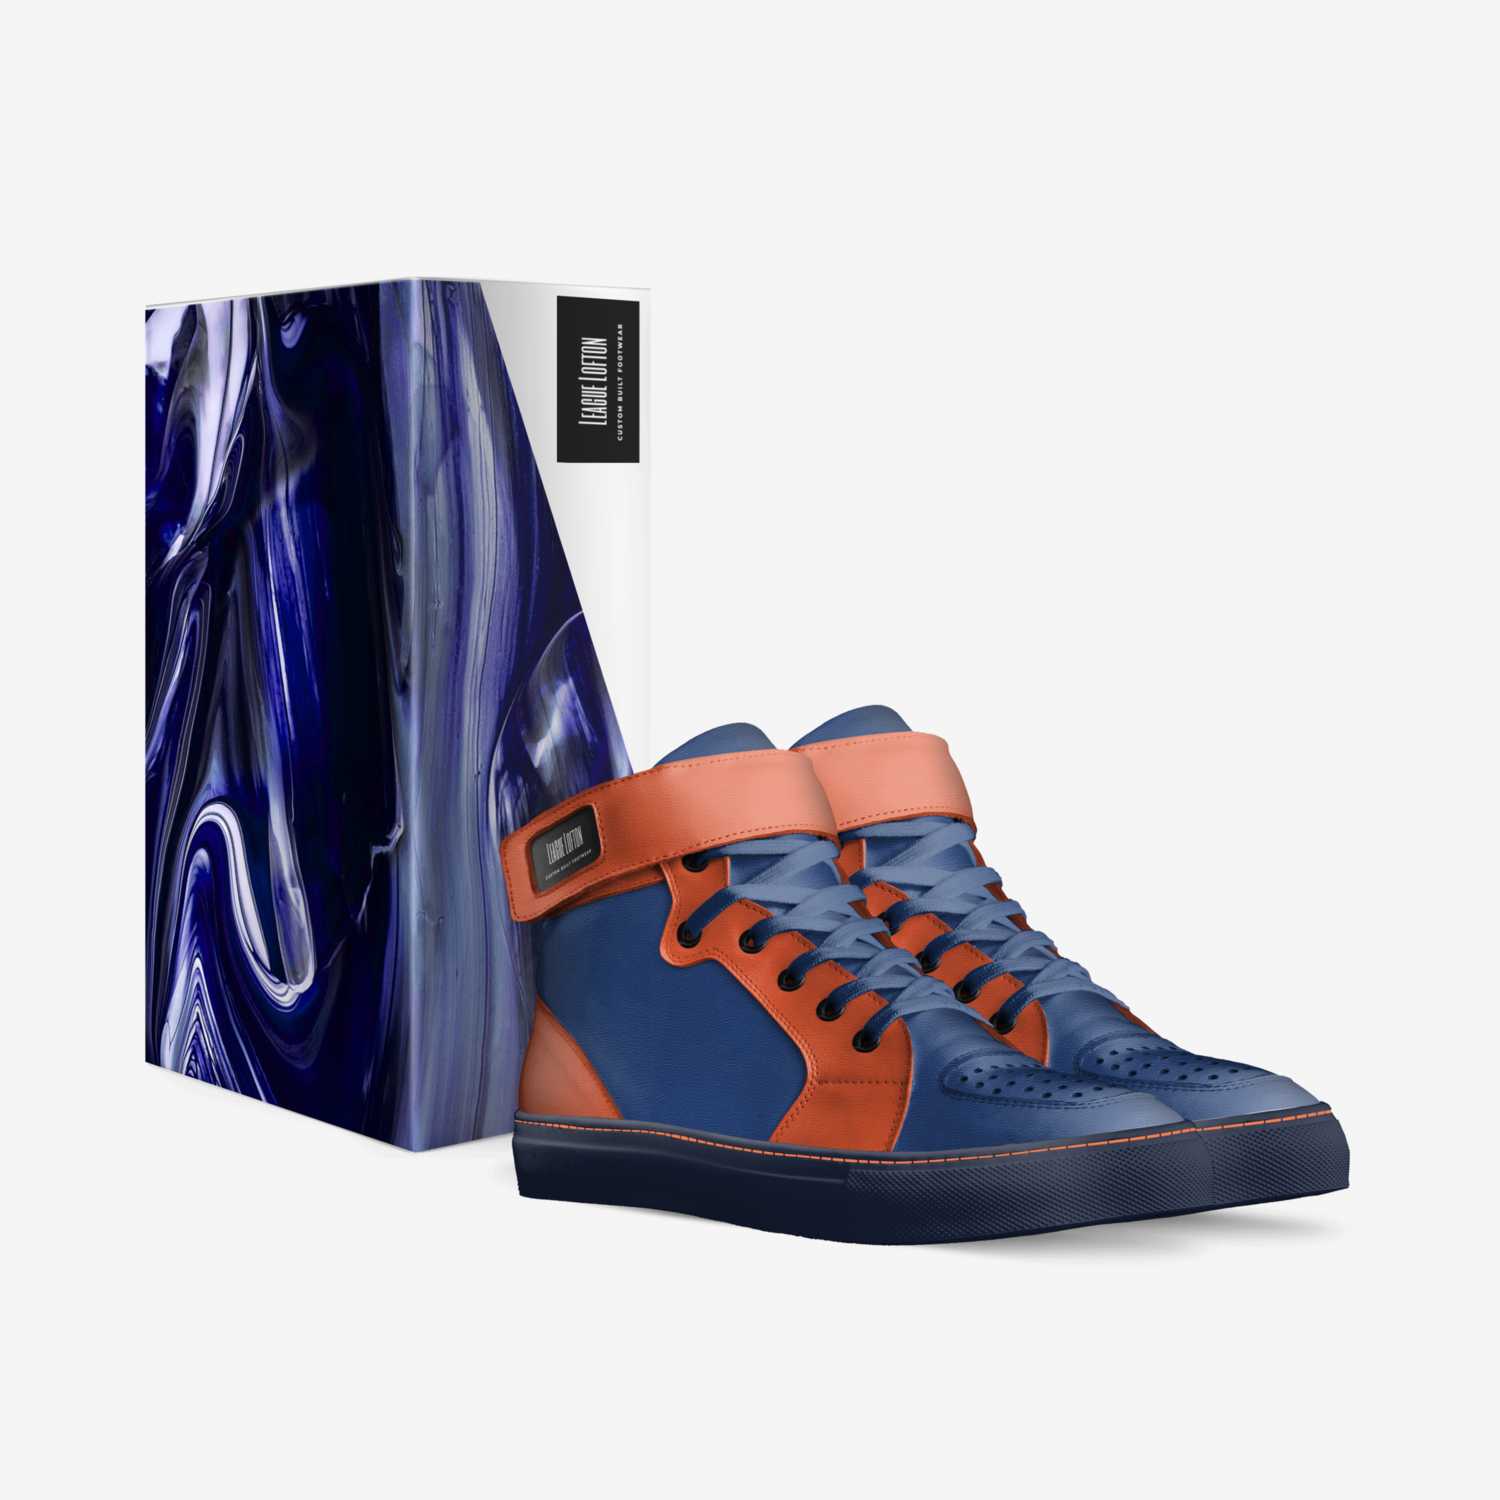 League Lofton custom made in Italy shoes by Thomas Lofton | Box view